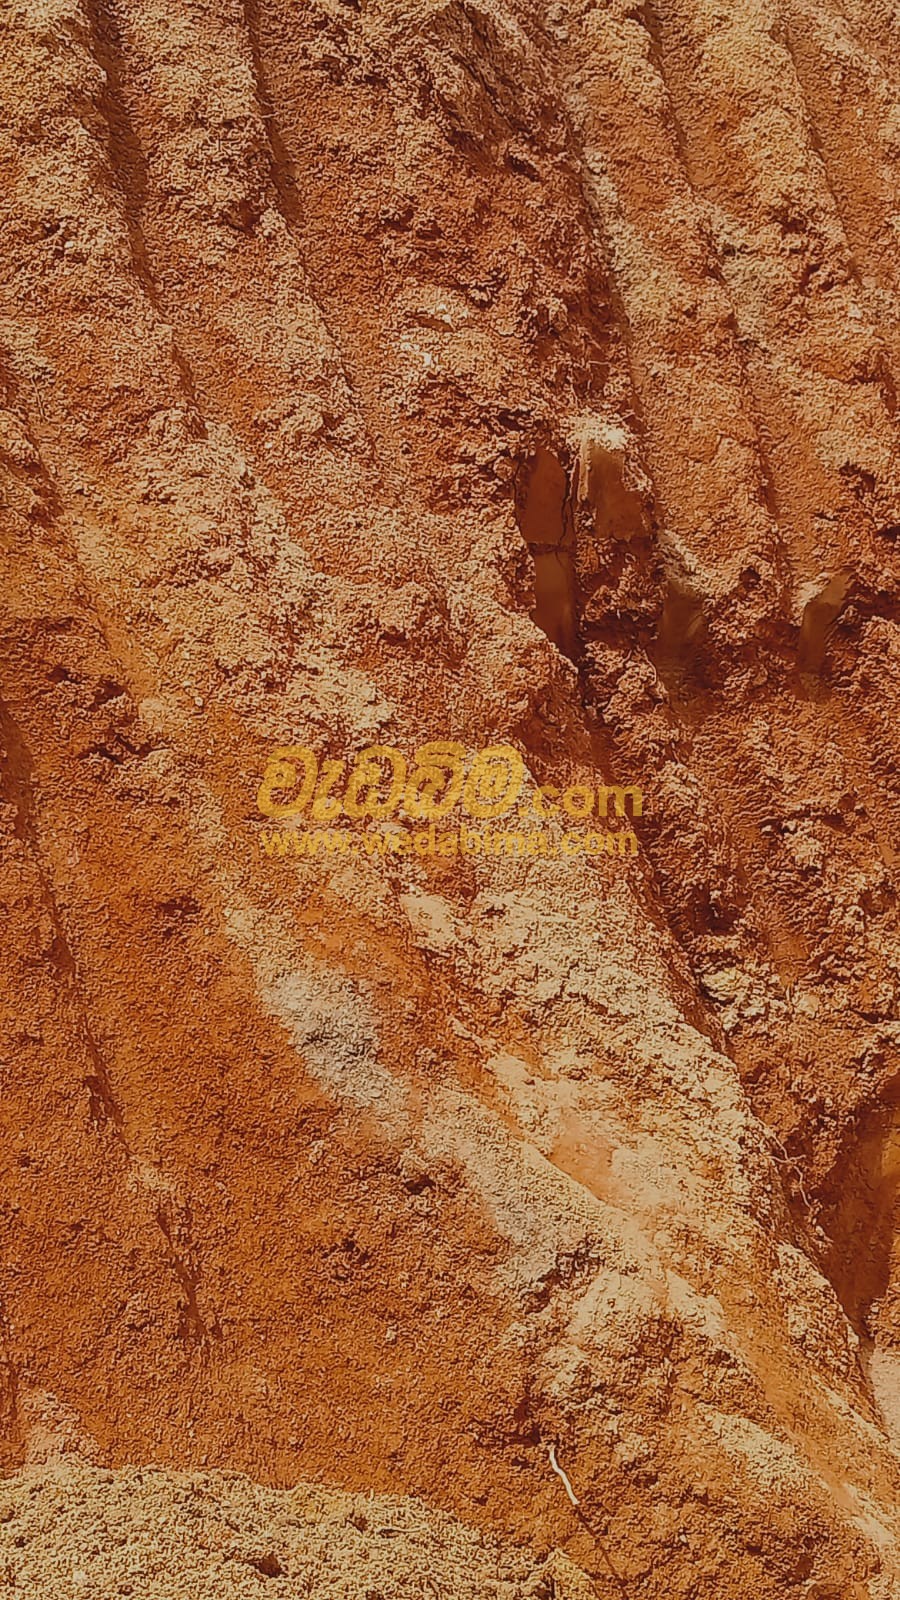 Cover image for Red Soil Price in Kaduwela